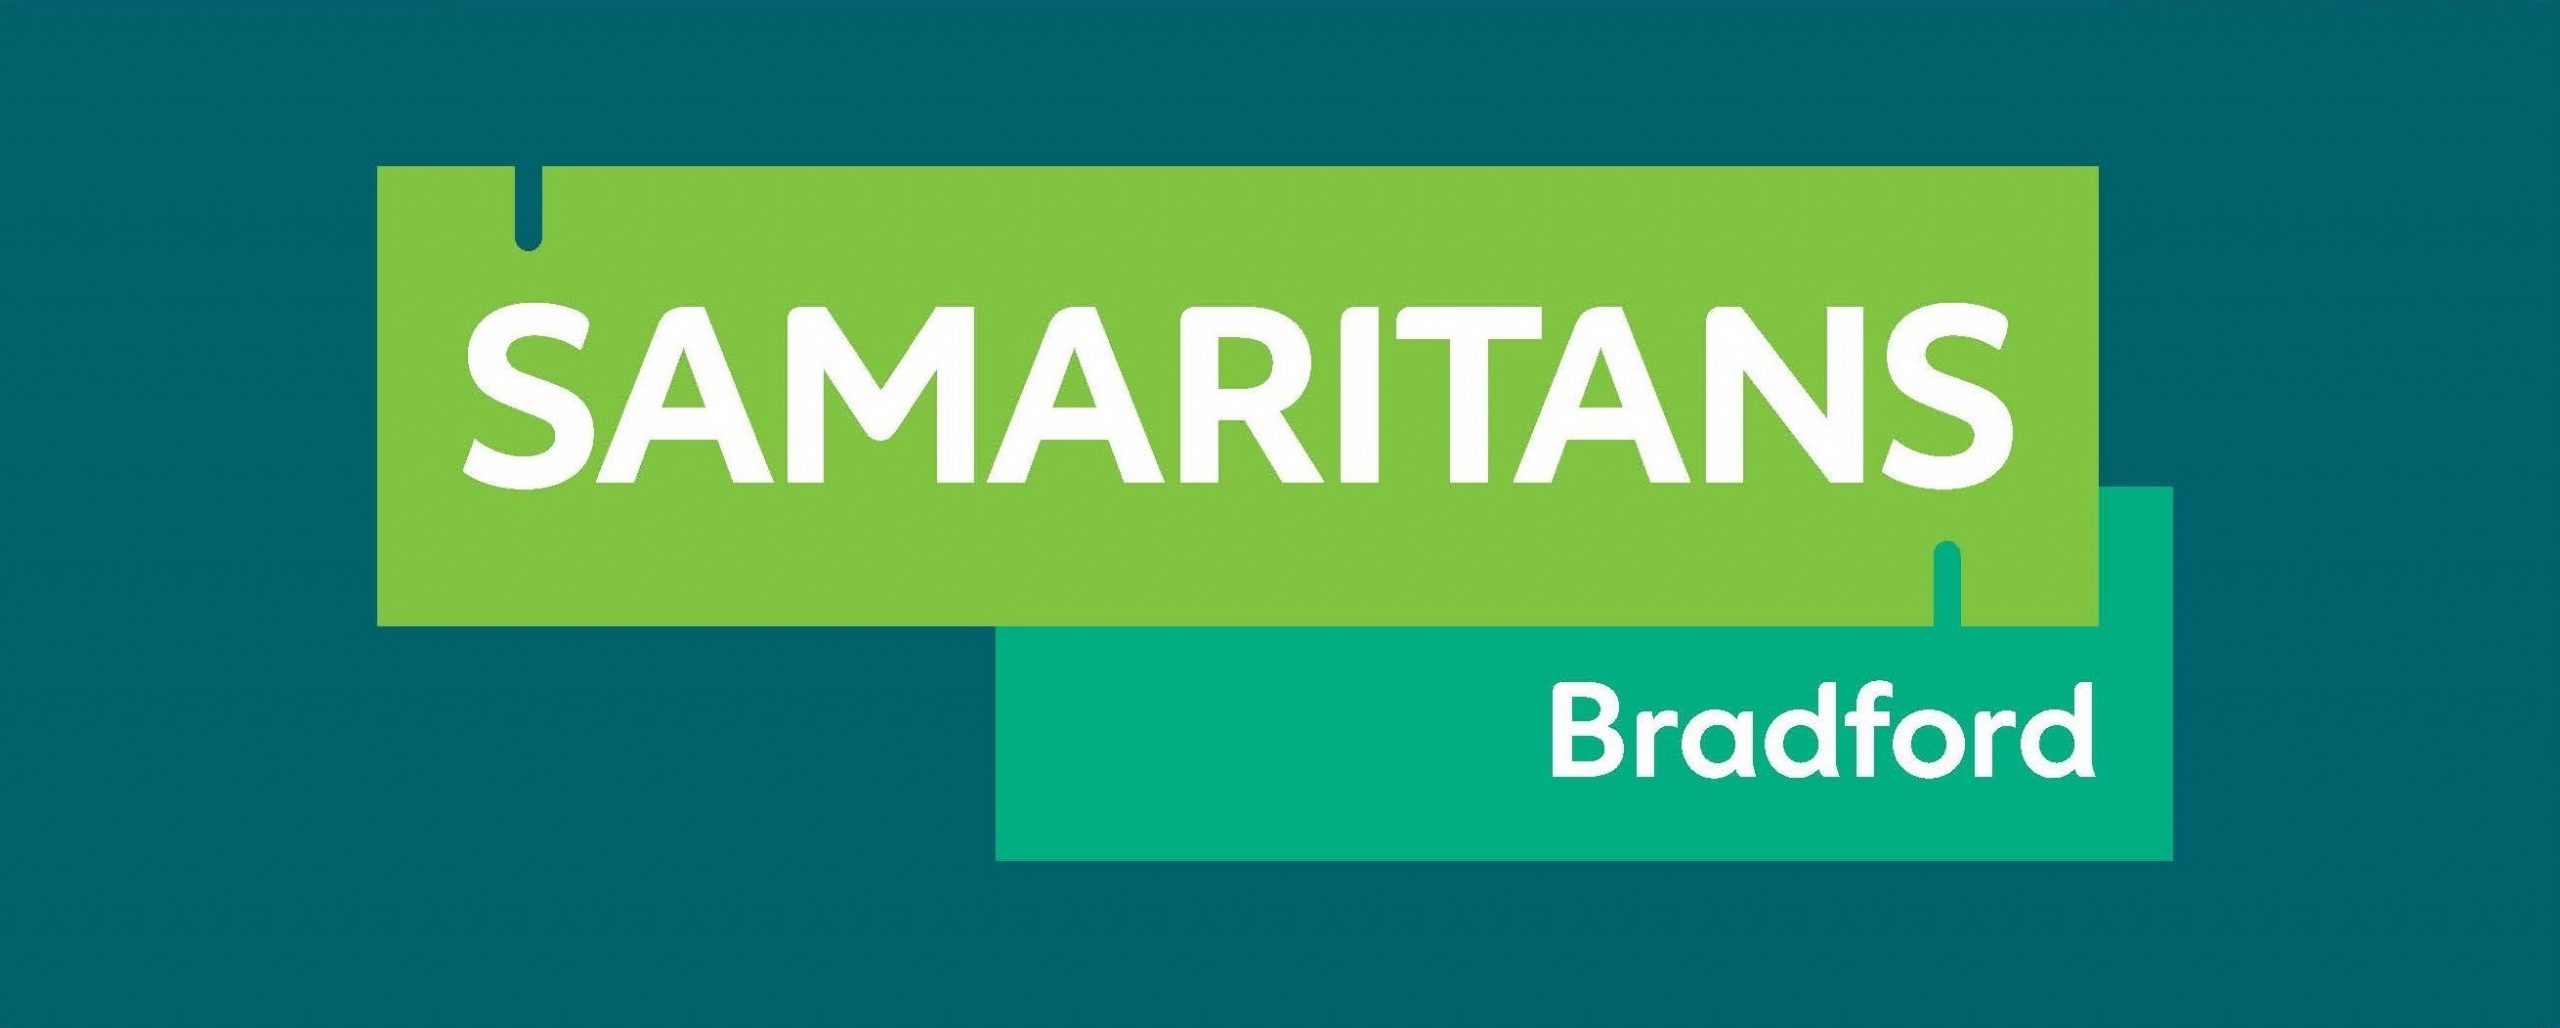 Bradford Samaritans logo